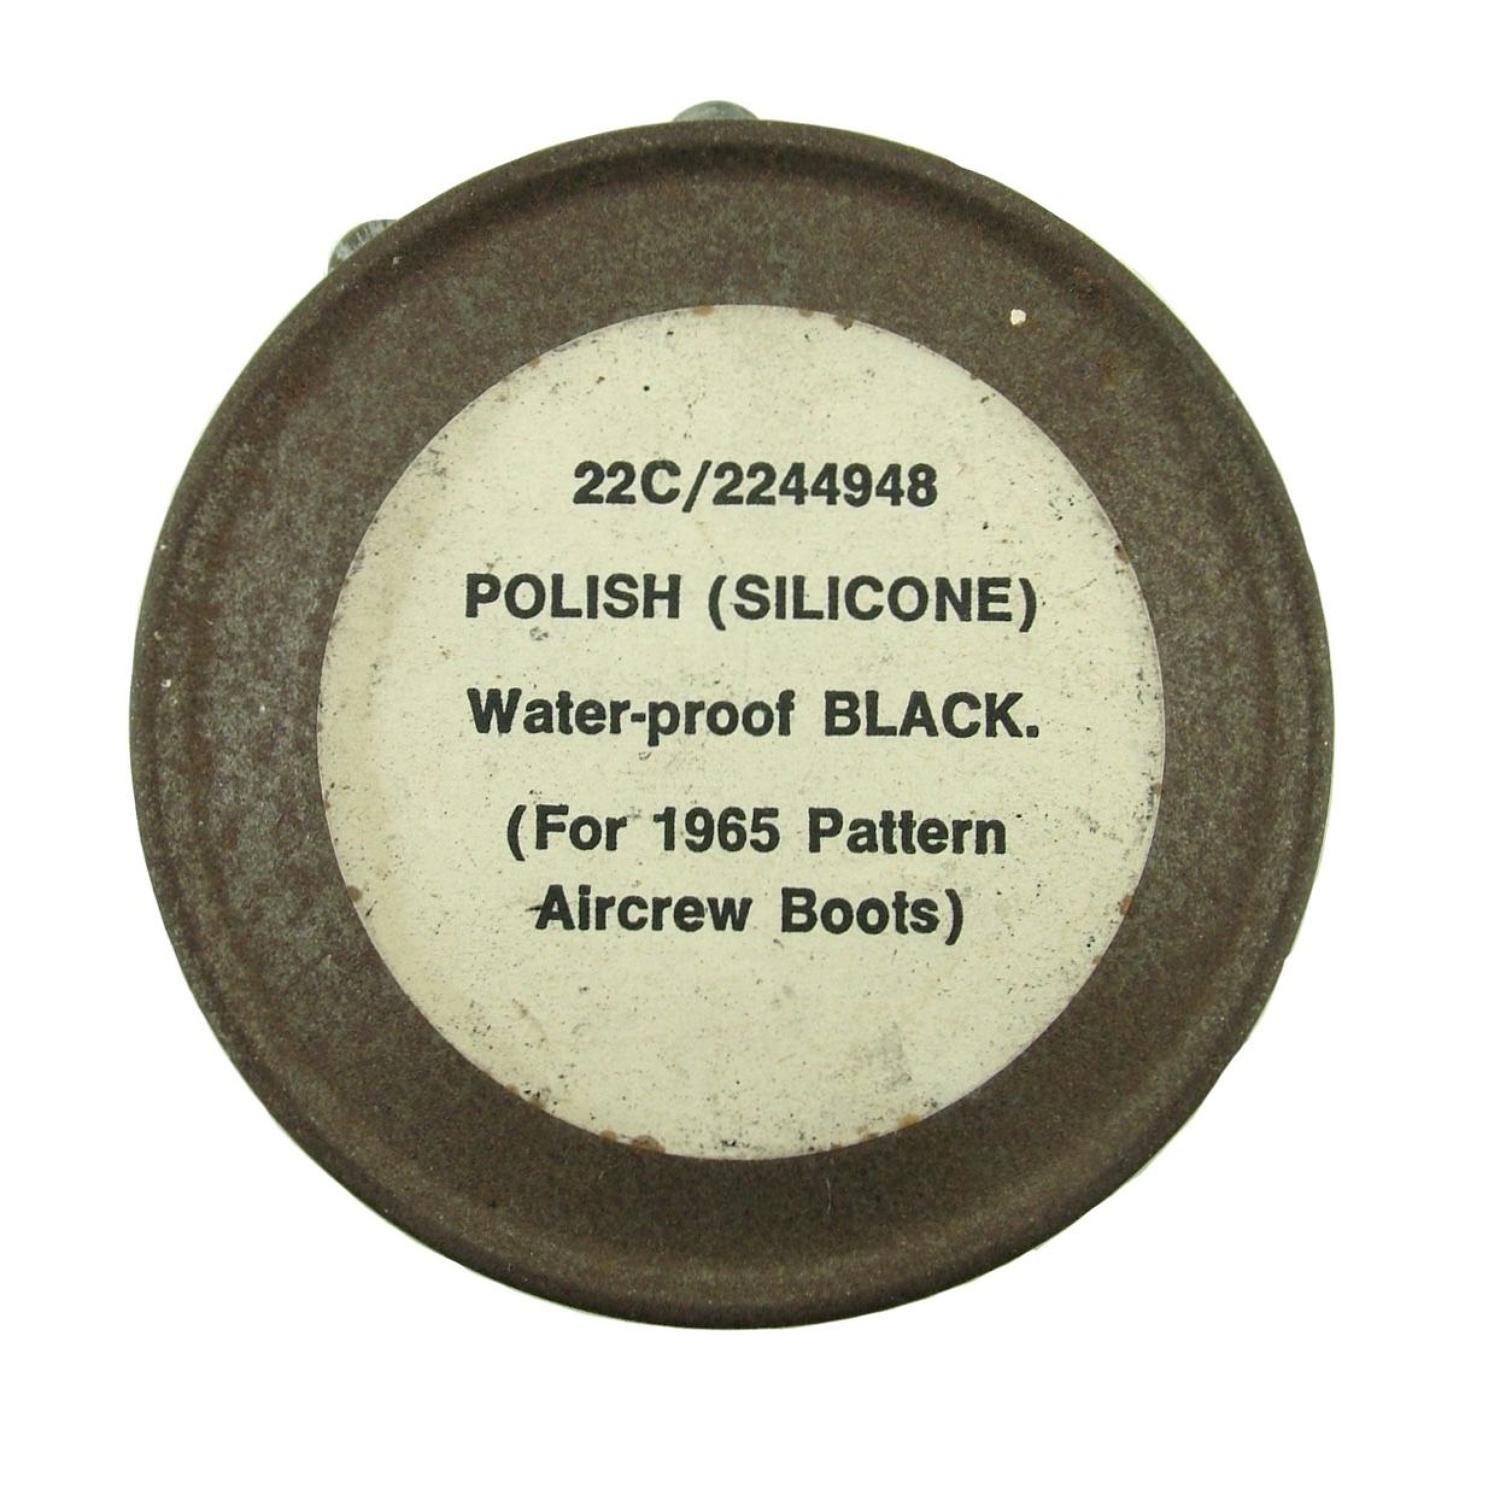 RAF 1965 pattern boot polish